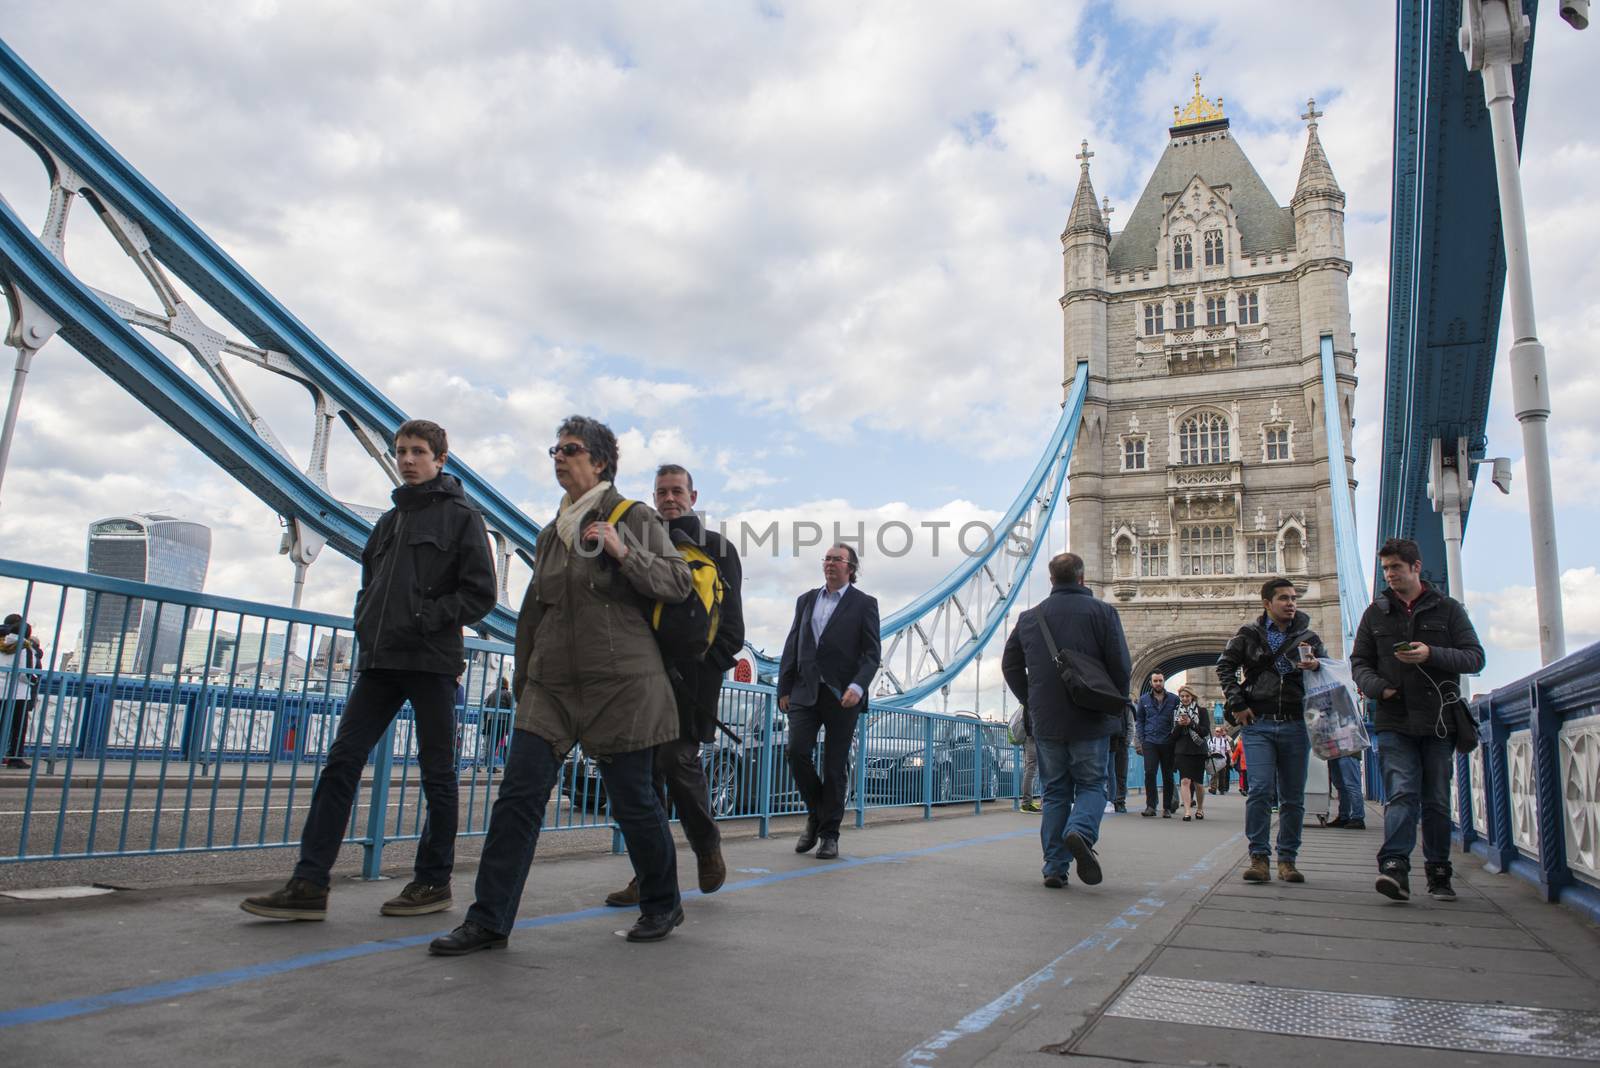 Tower Bridge by icenando